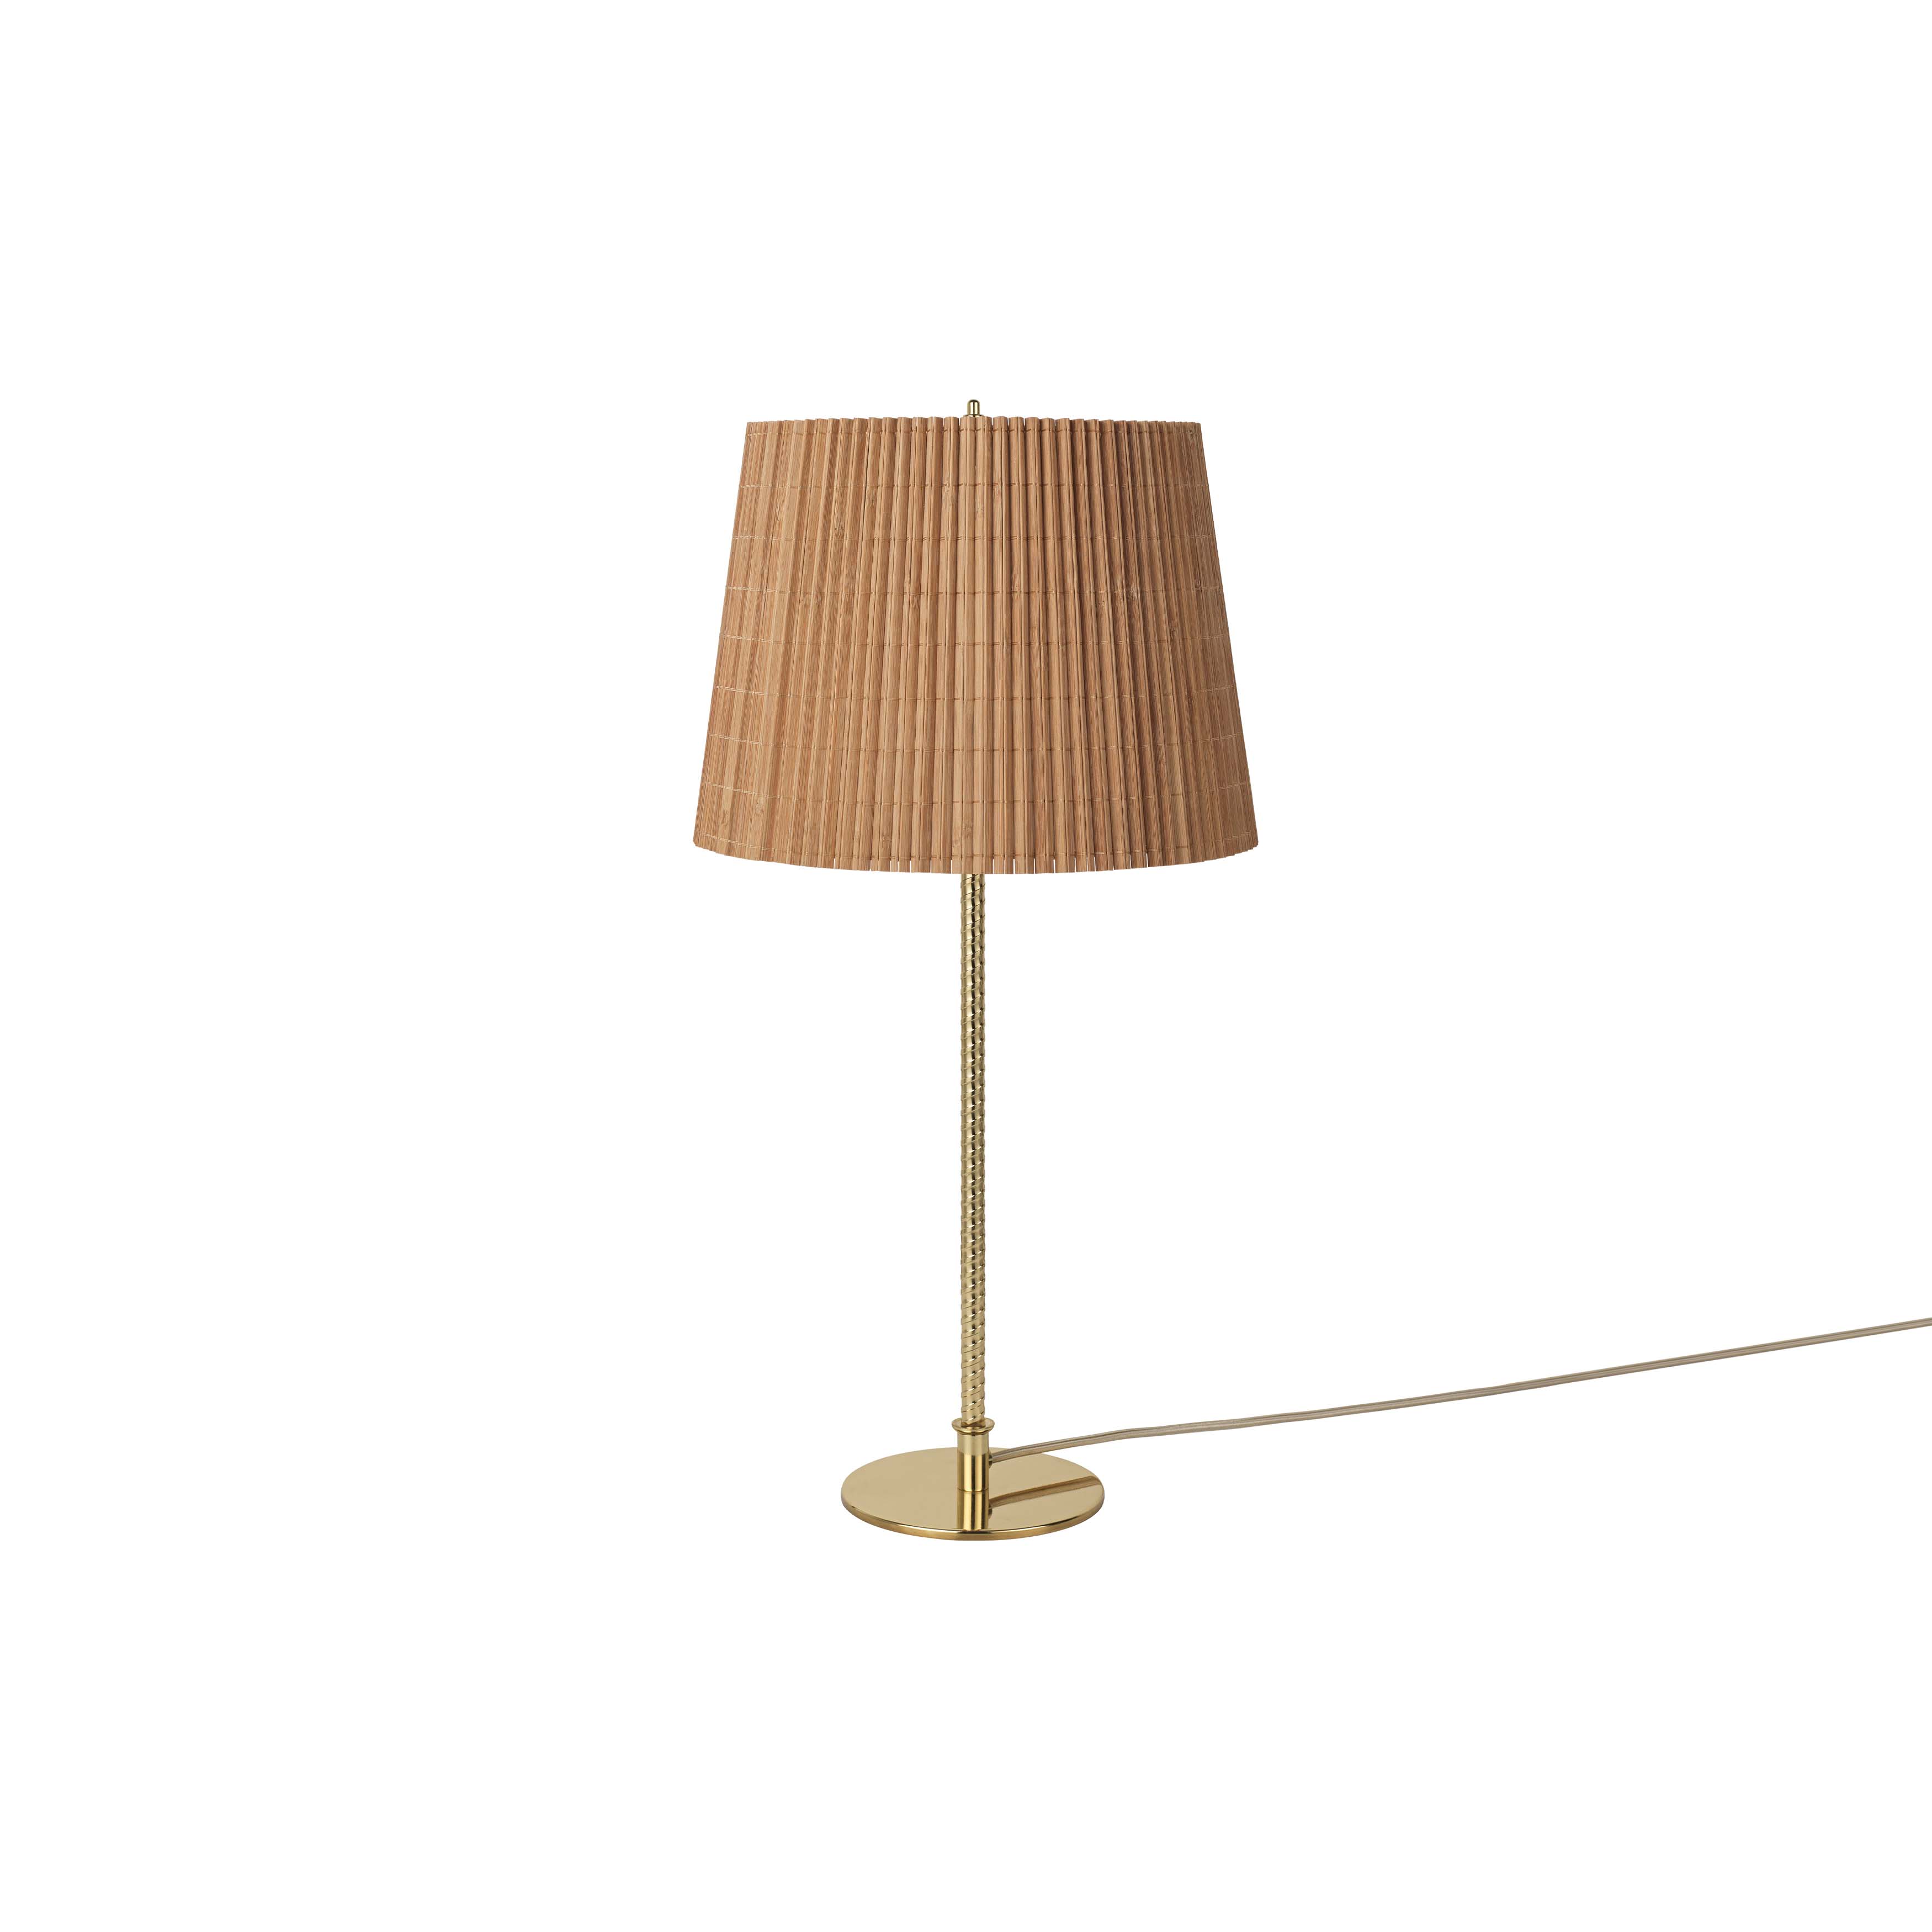 9205 Table Lamp: bamboo